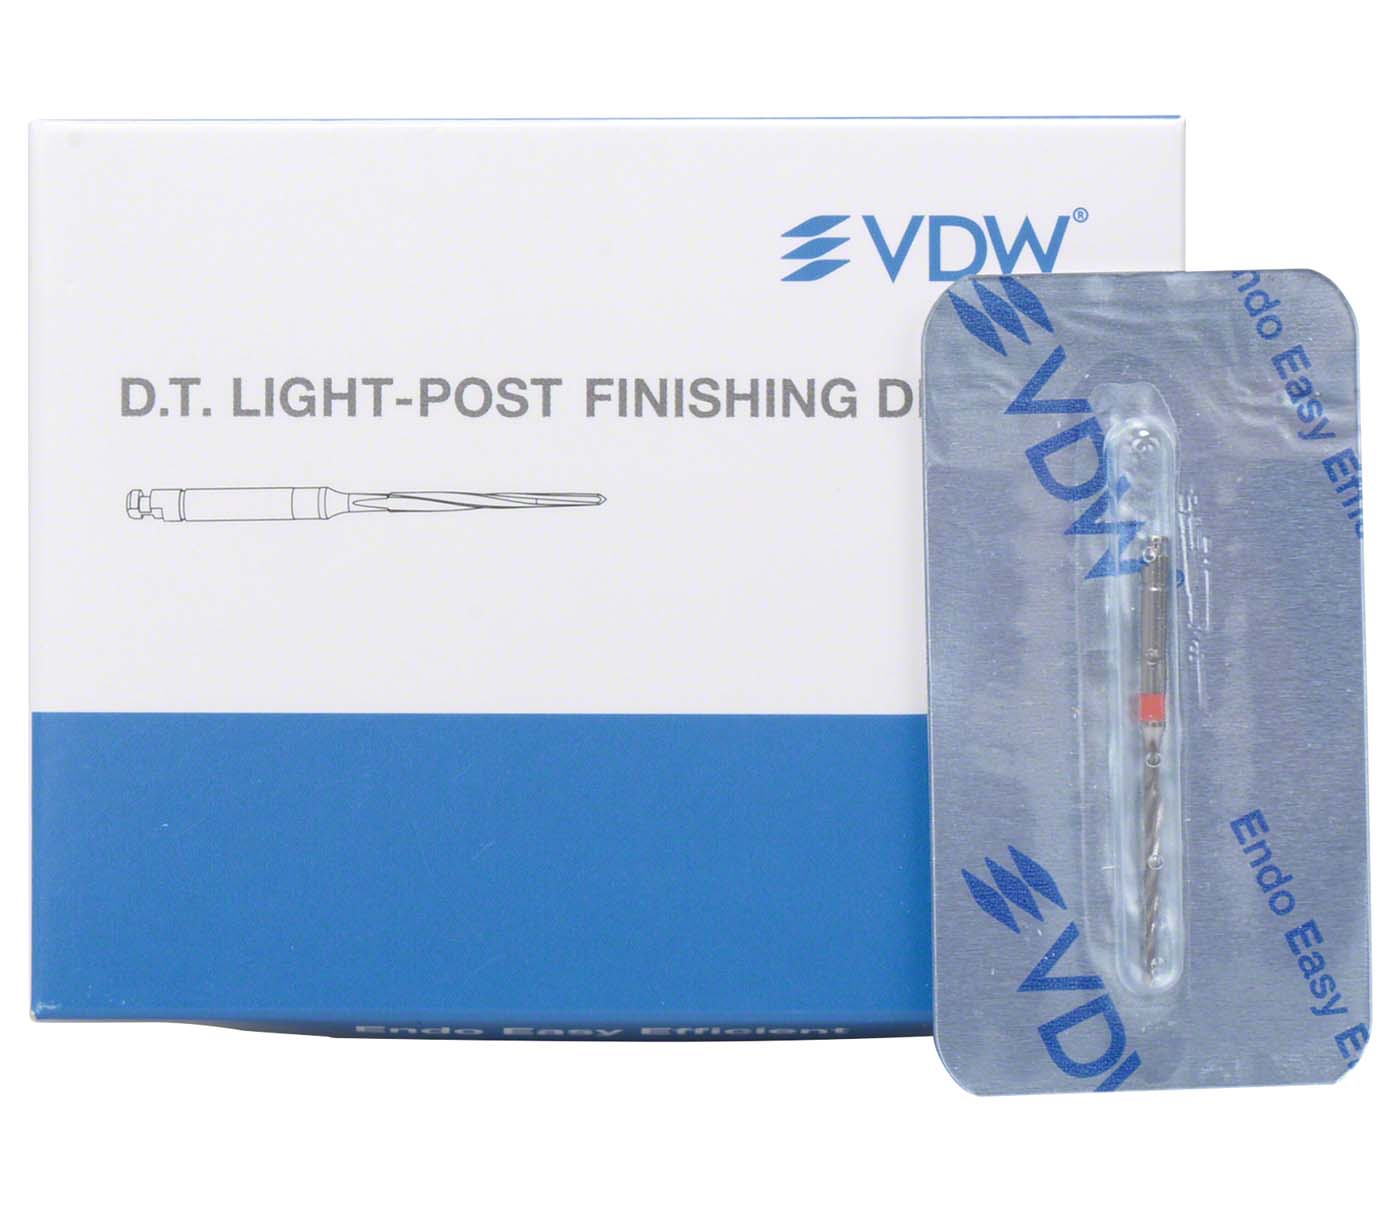 D.T. LIGHT-POST FINISHING DRILL VDW